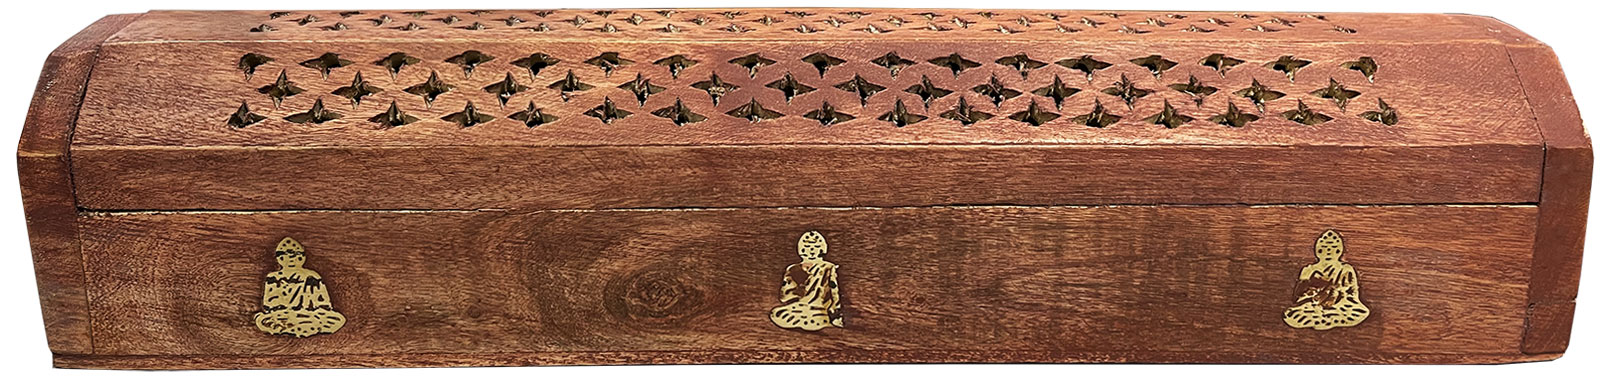 Incense holder Buddha wooden box 30cm